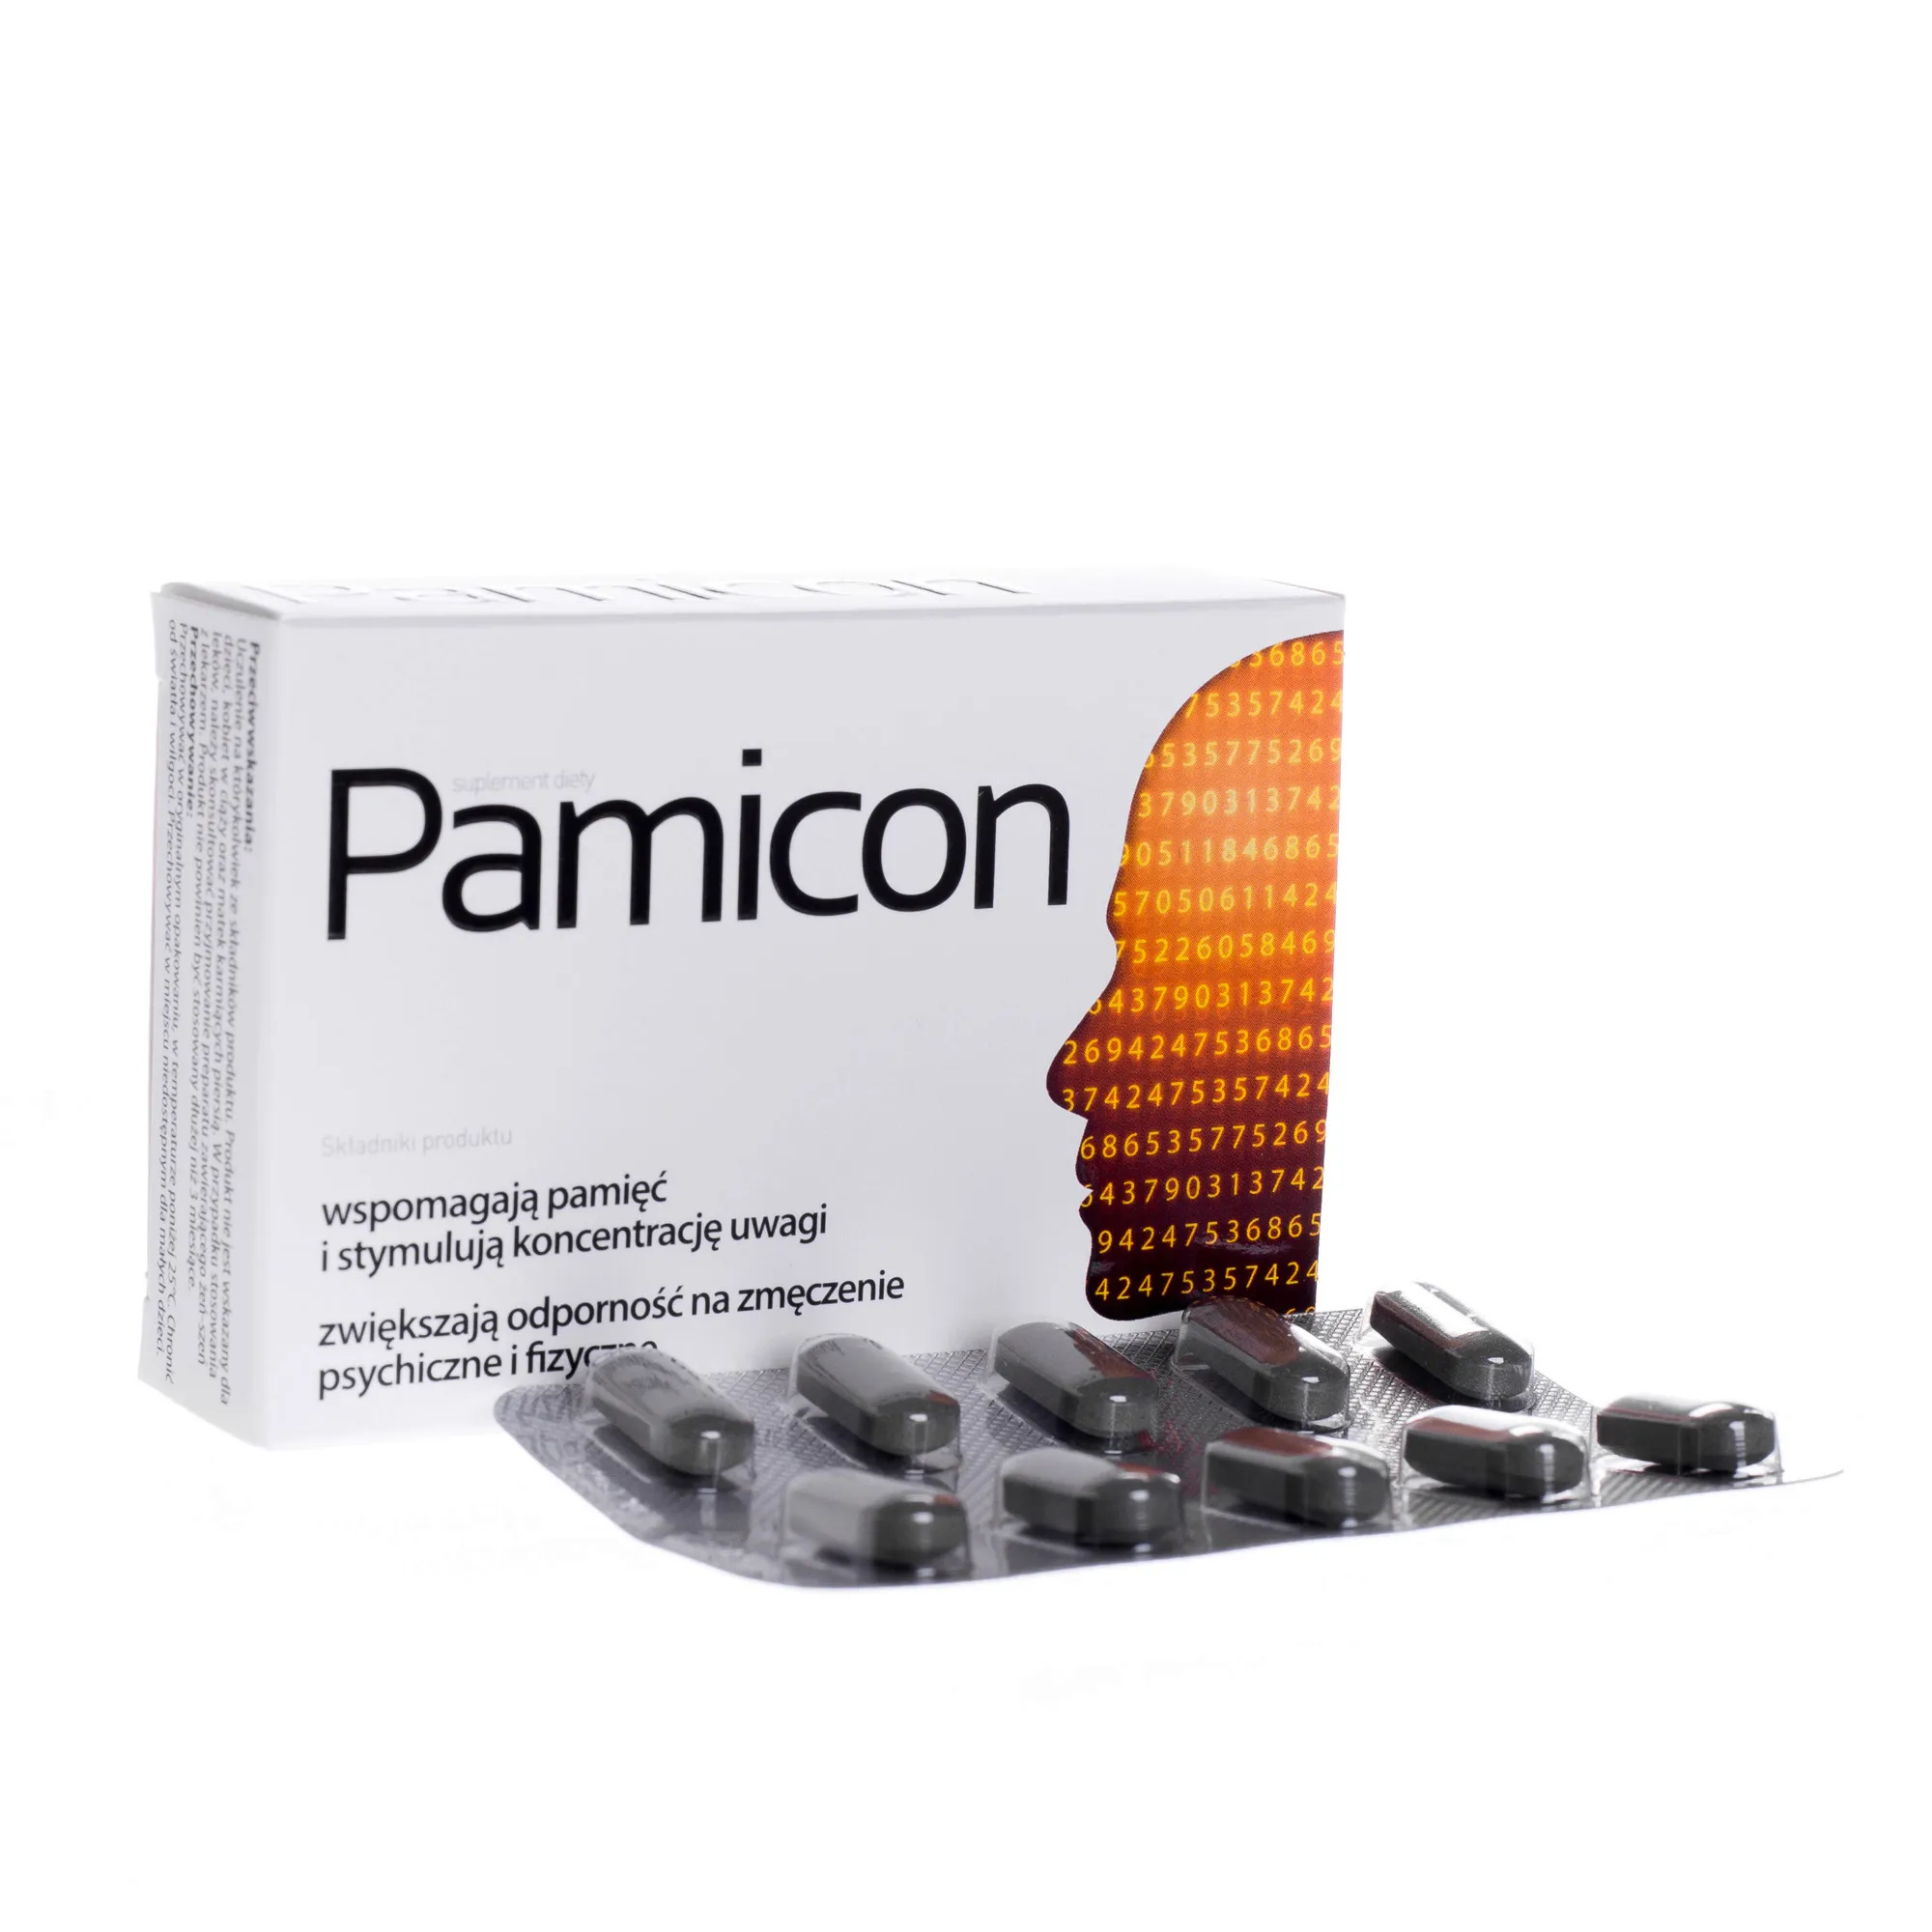 Pamicon, suplement diety, 30 tabletek